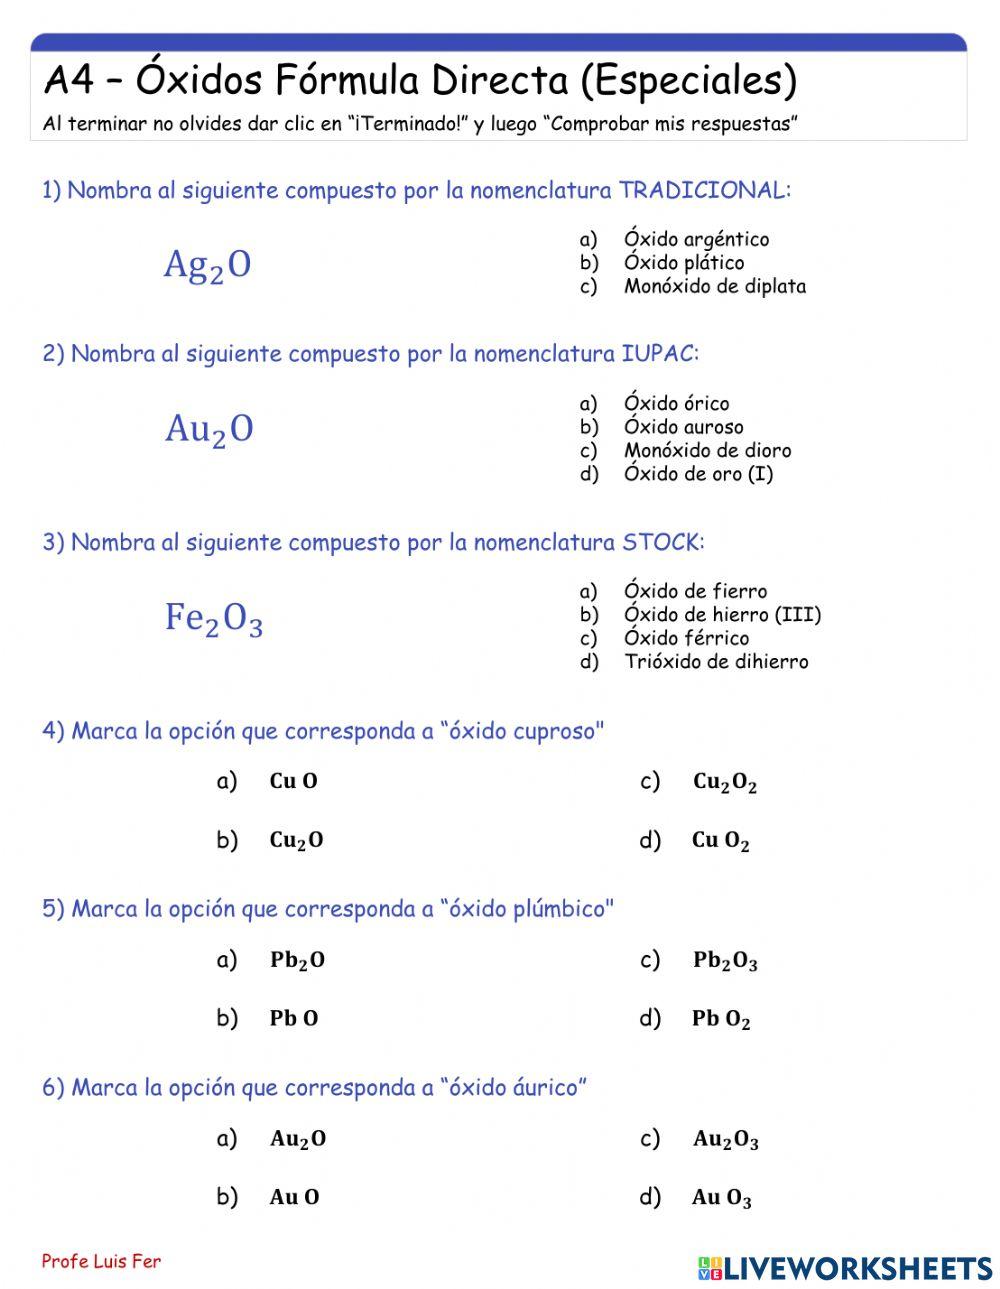 Óxidos Básicos Fómula Directa (Elementos con nombres especiales)